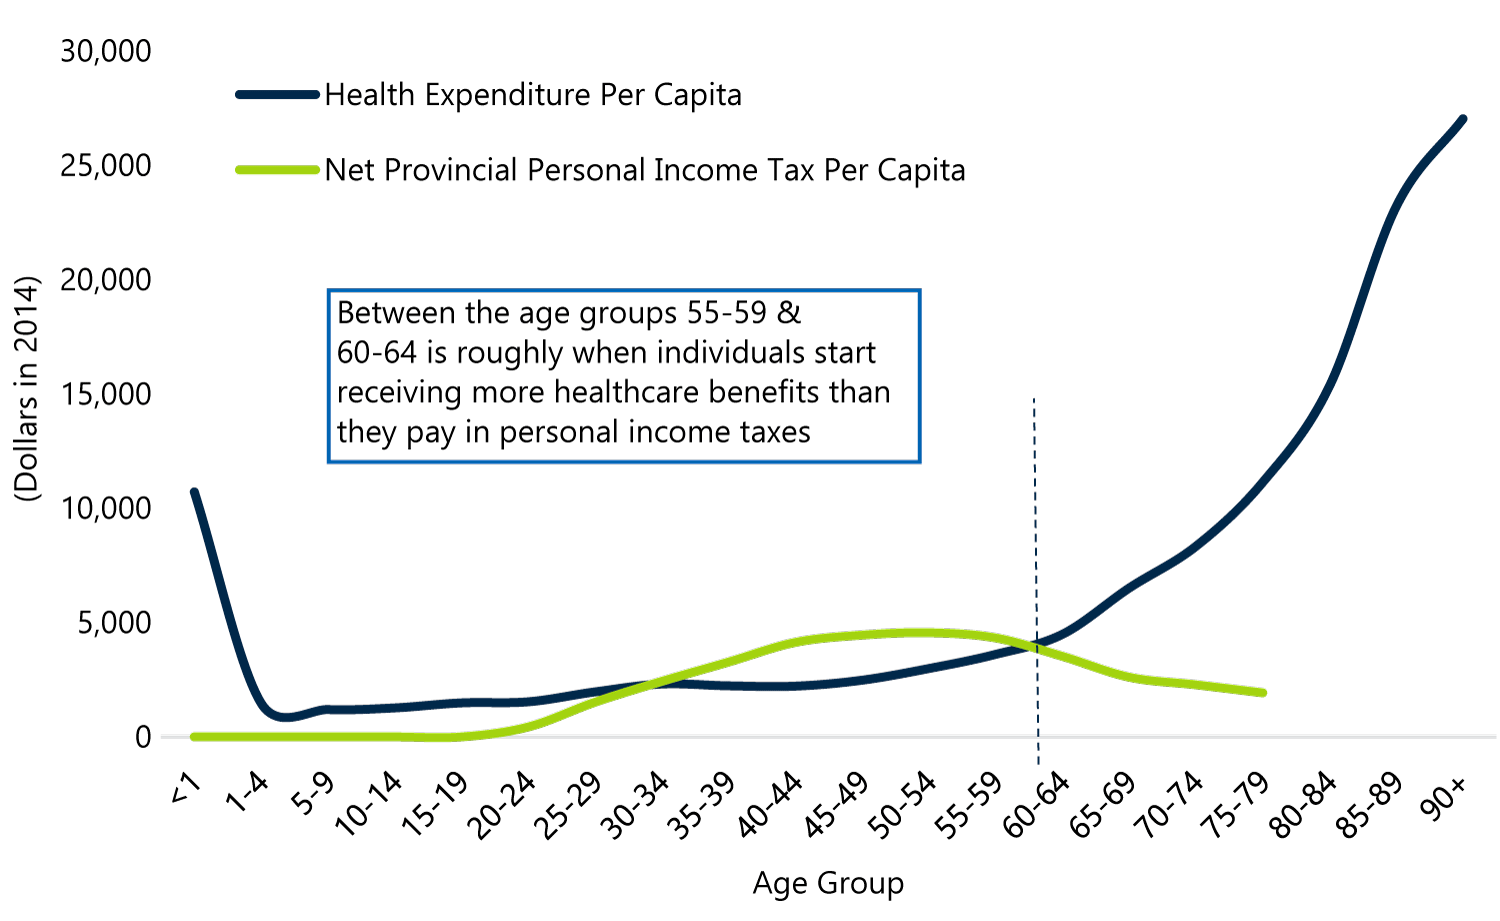 After age 60, per capita health expenditure rises while per capita provincial personal income tax falls